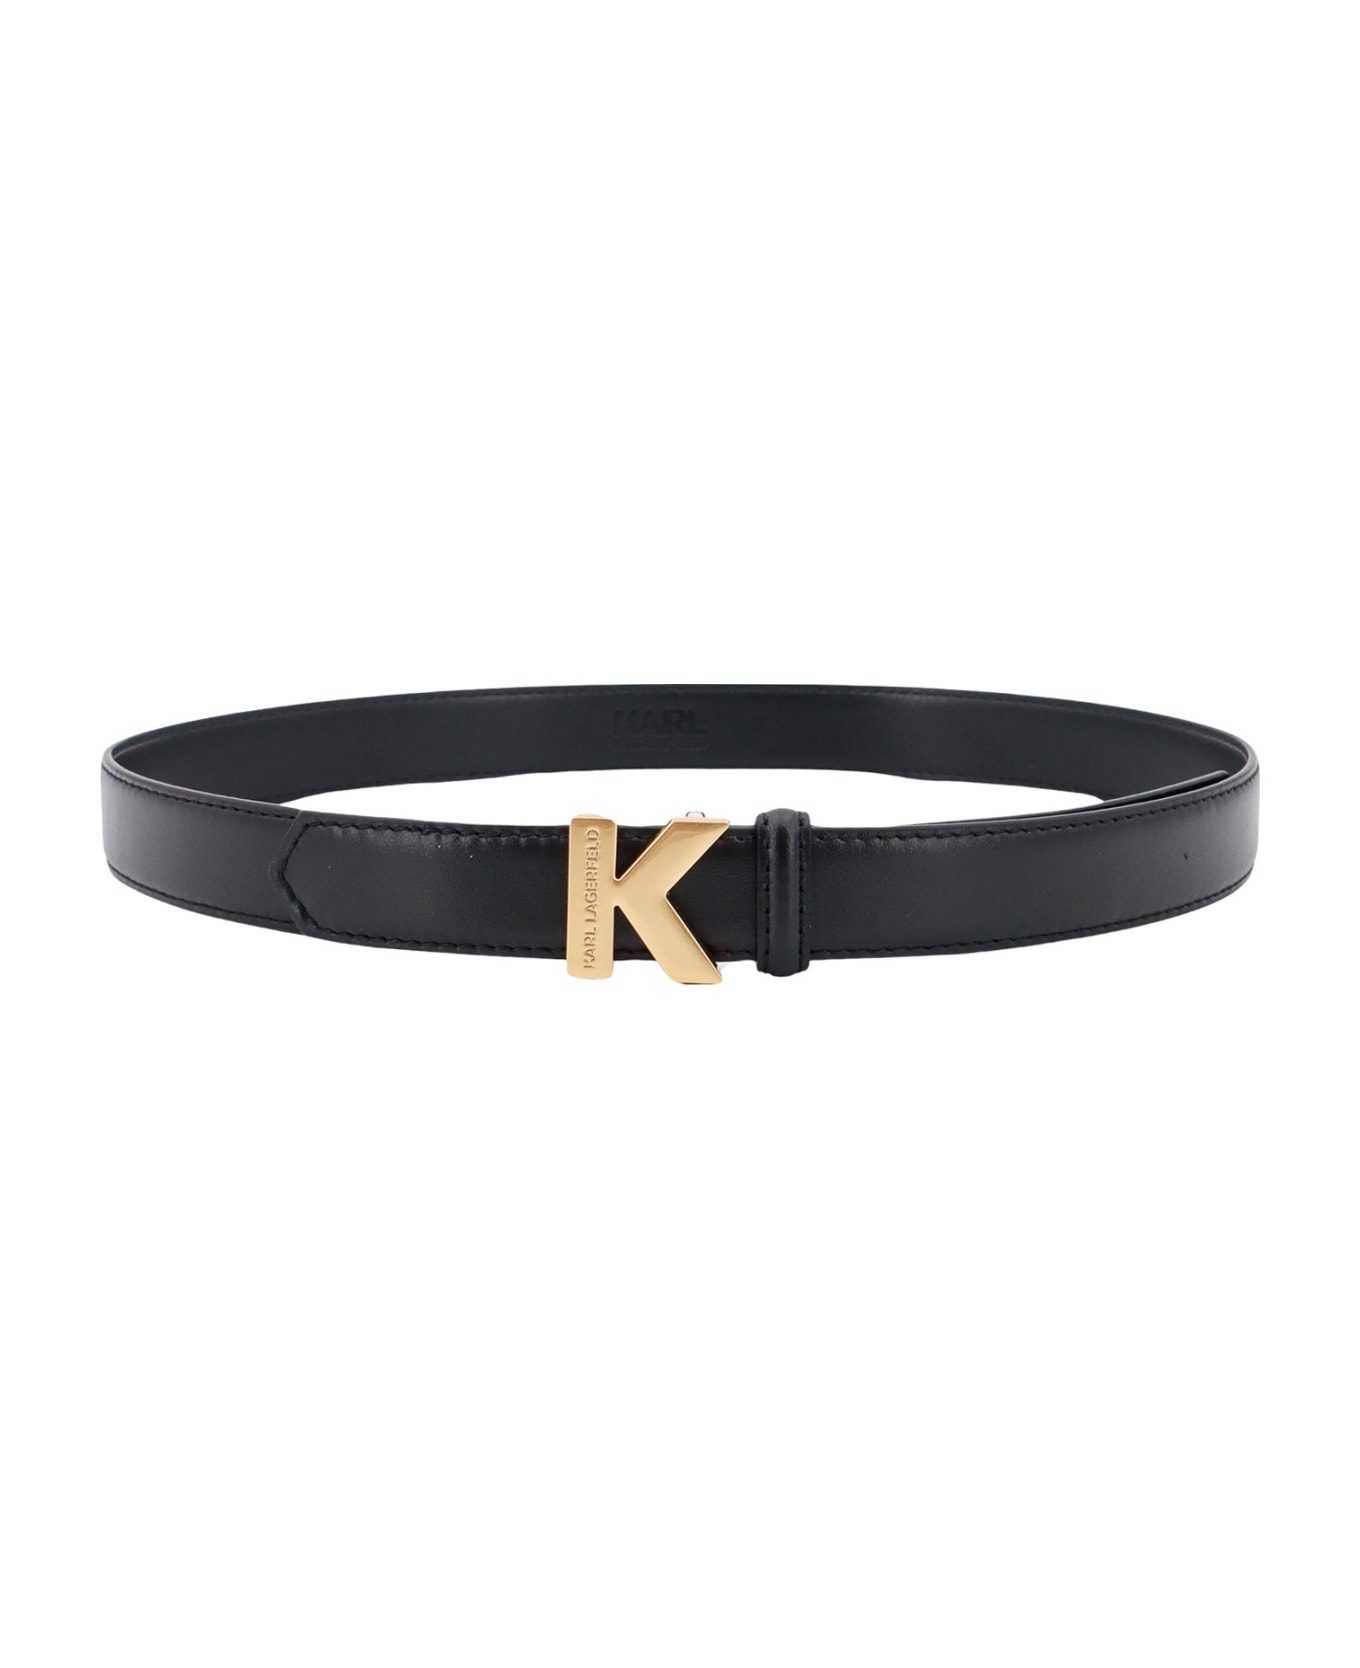 Karl Lagerfeld Belt - Black